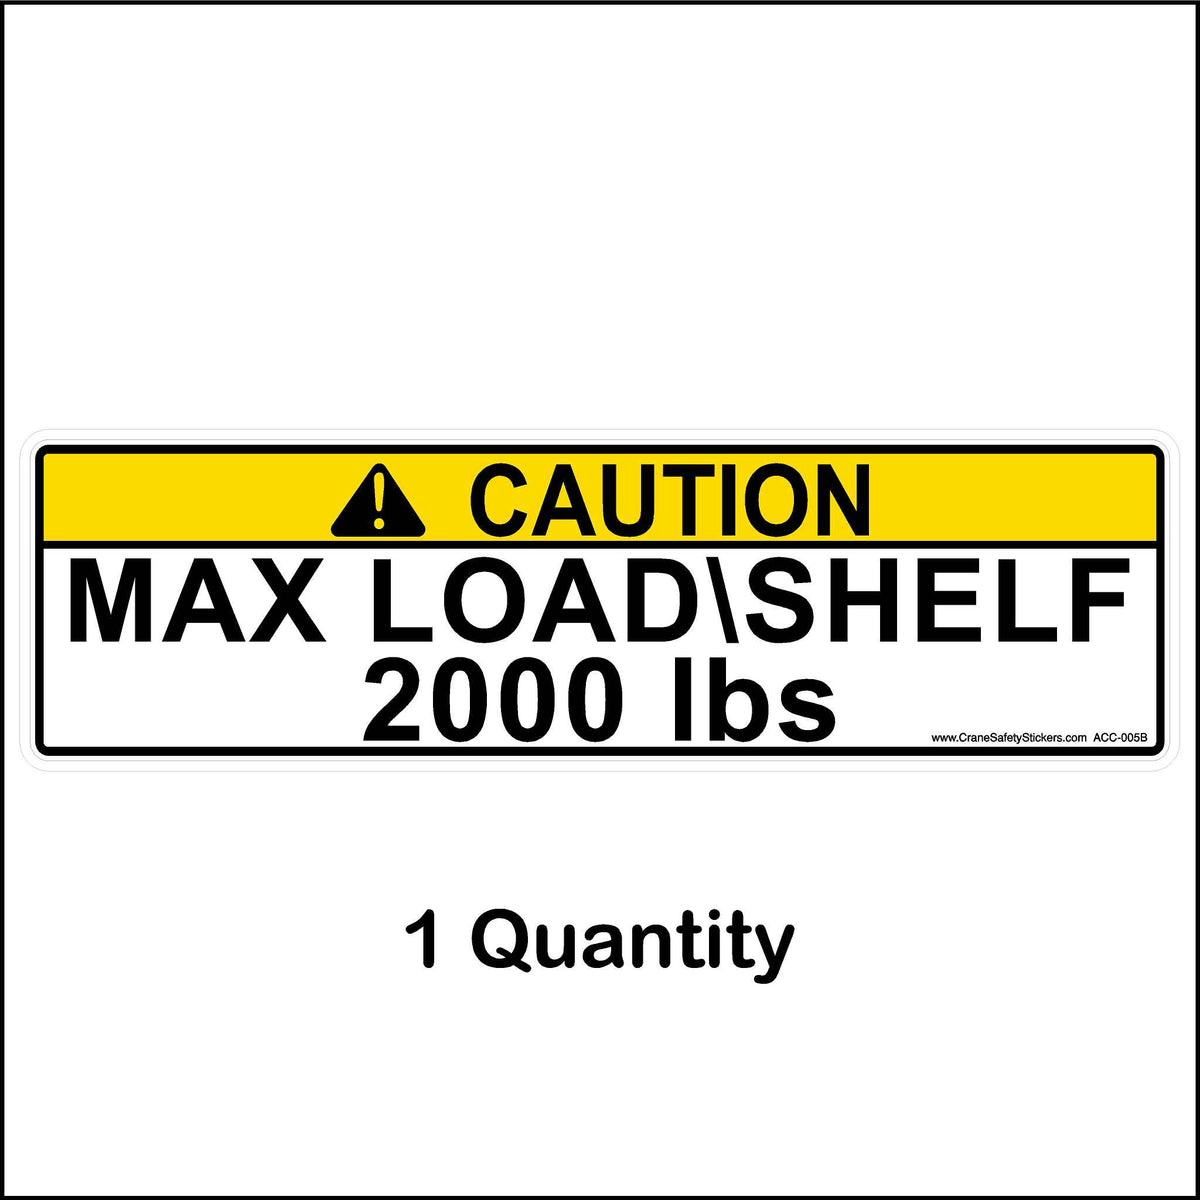 2000 lbs maximum load shelf pallet racking sticker.